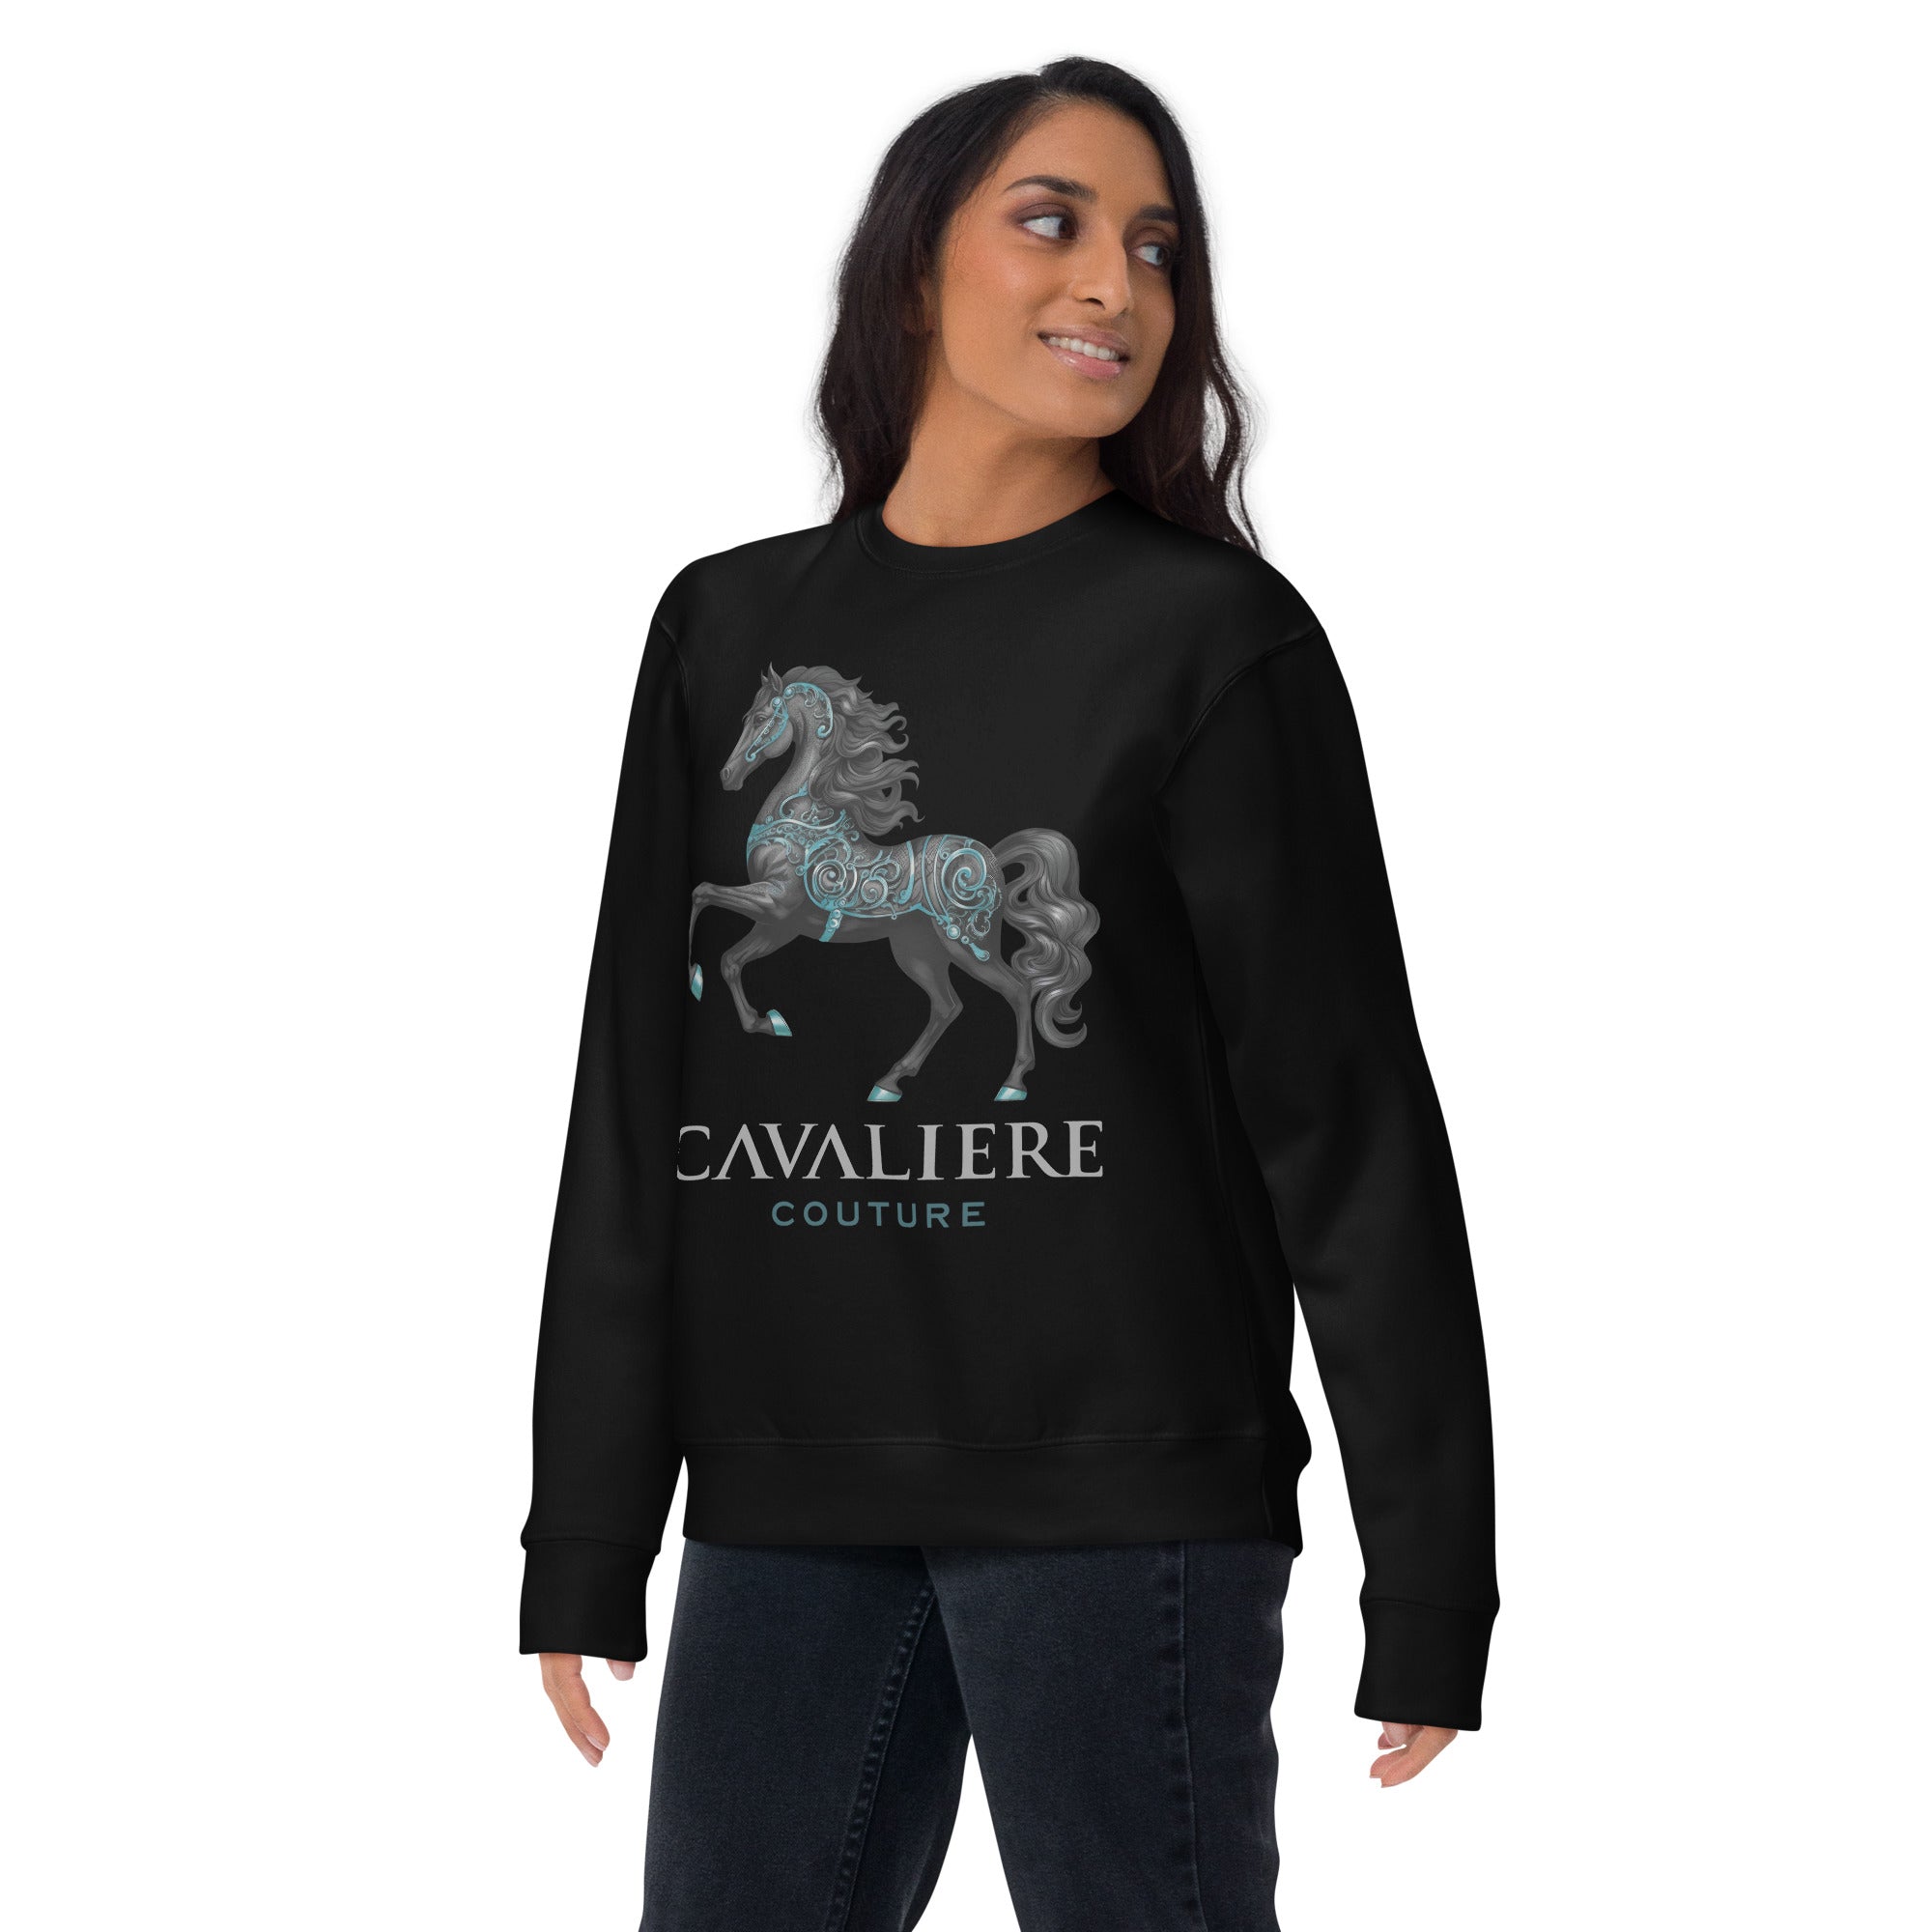 Cavaliere Couture Sweatshirt